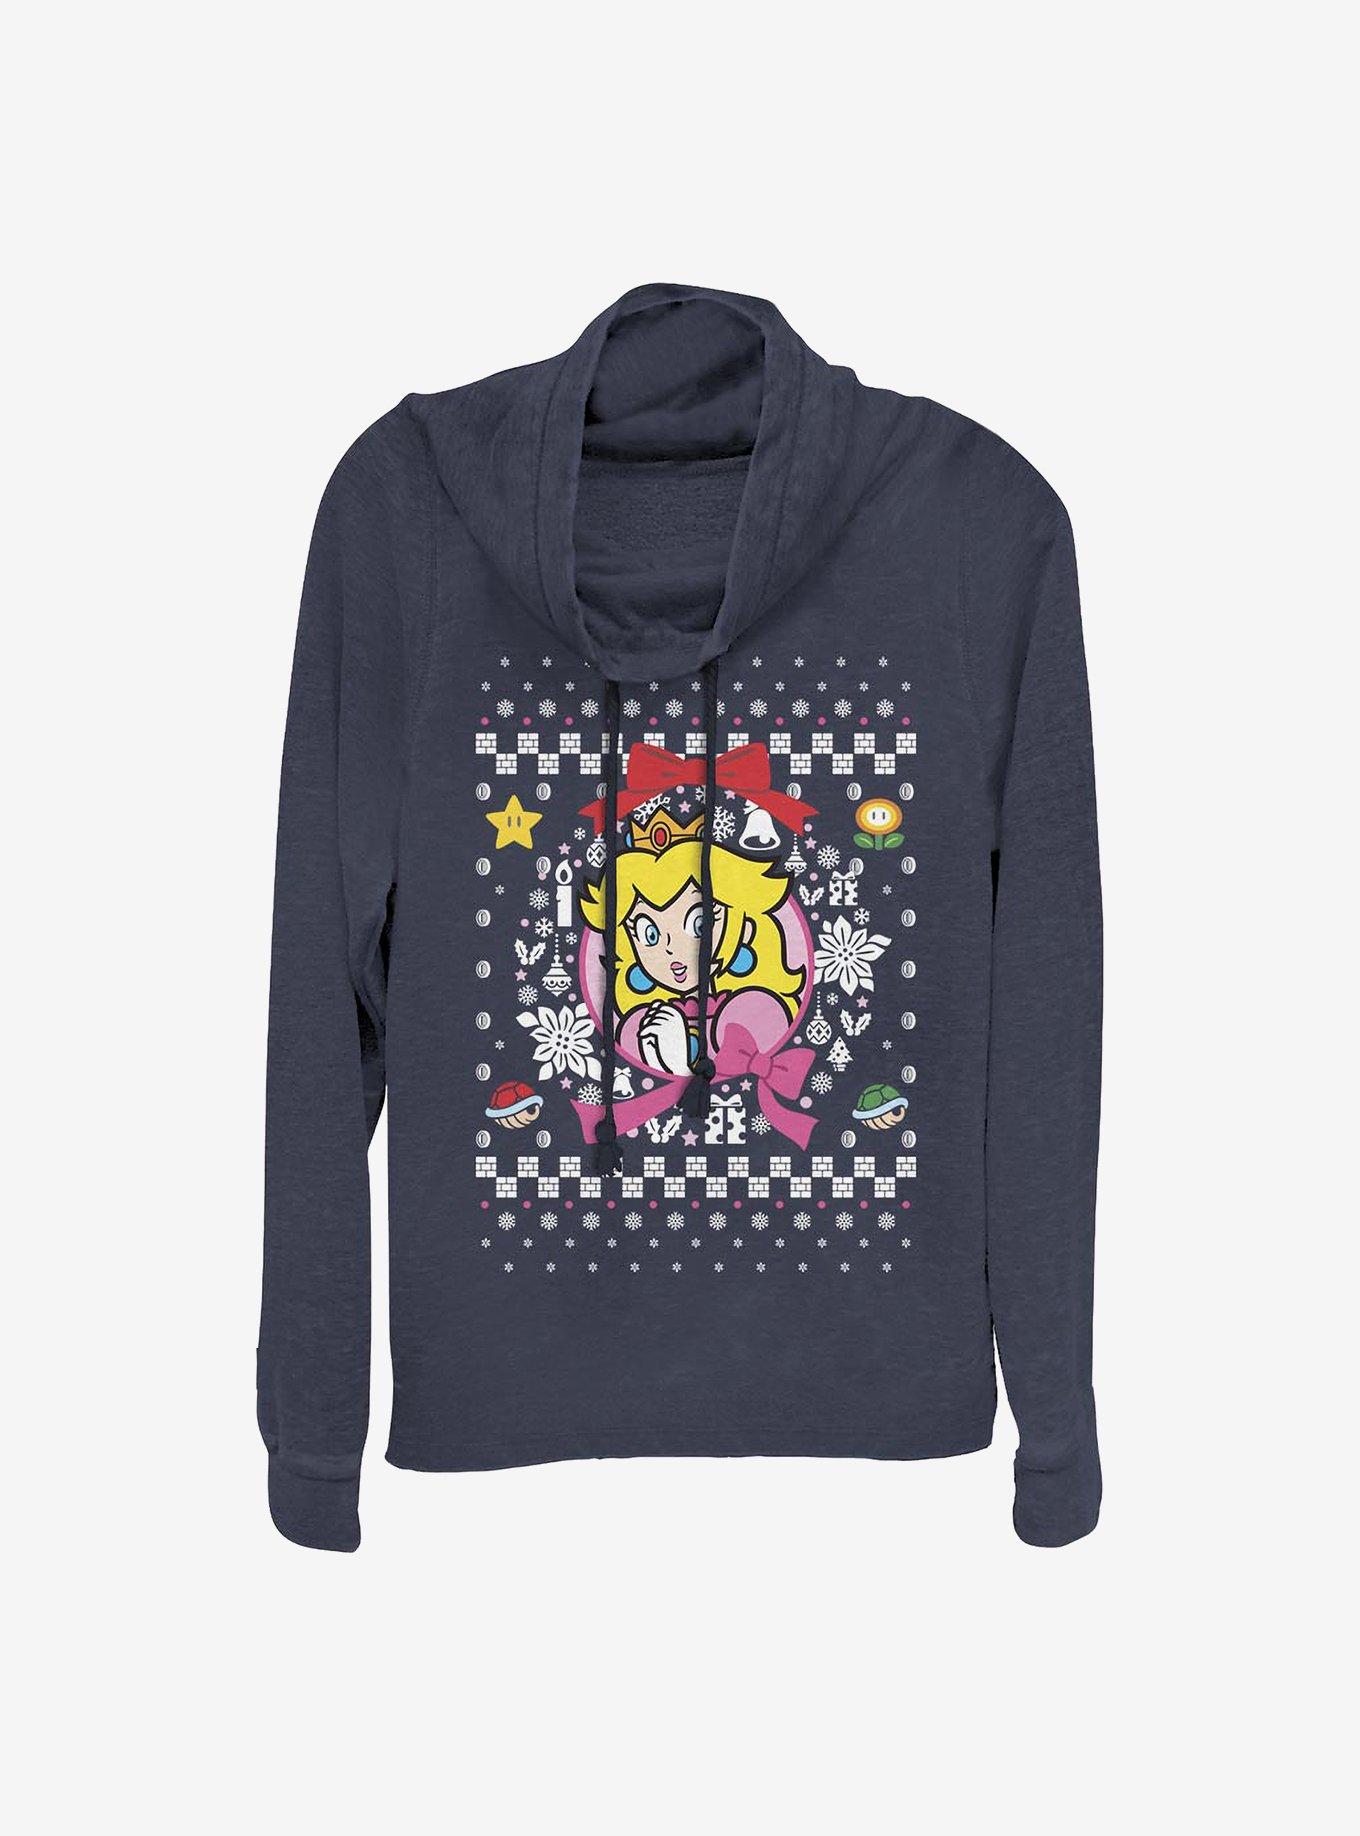 Super Mario Princess Wreath Ugly Christmas Sweater Cowl Neck Long-Sleeve Girls Top, NAVY, hi-res